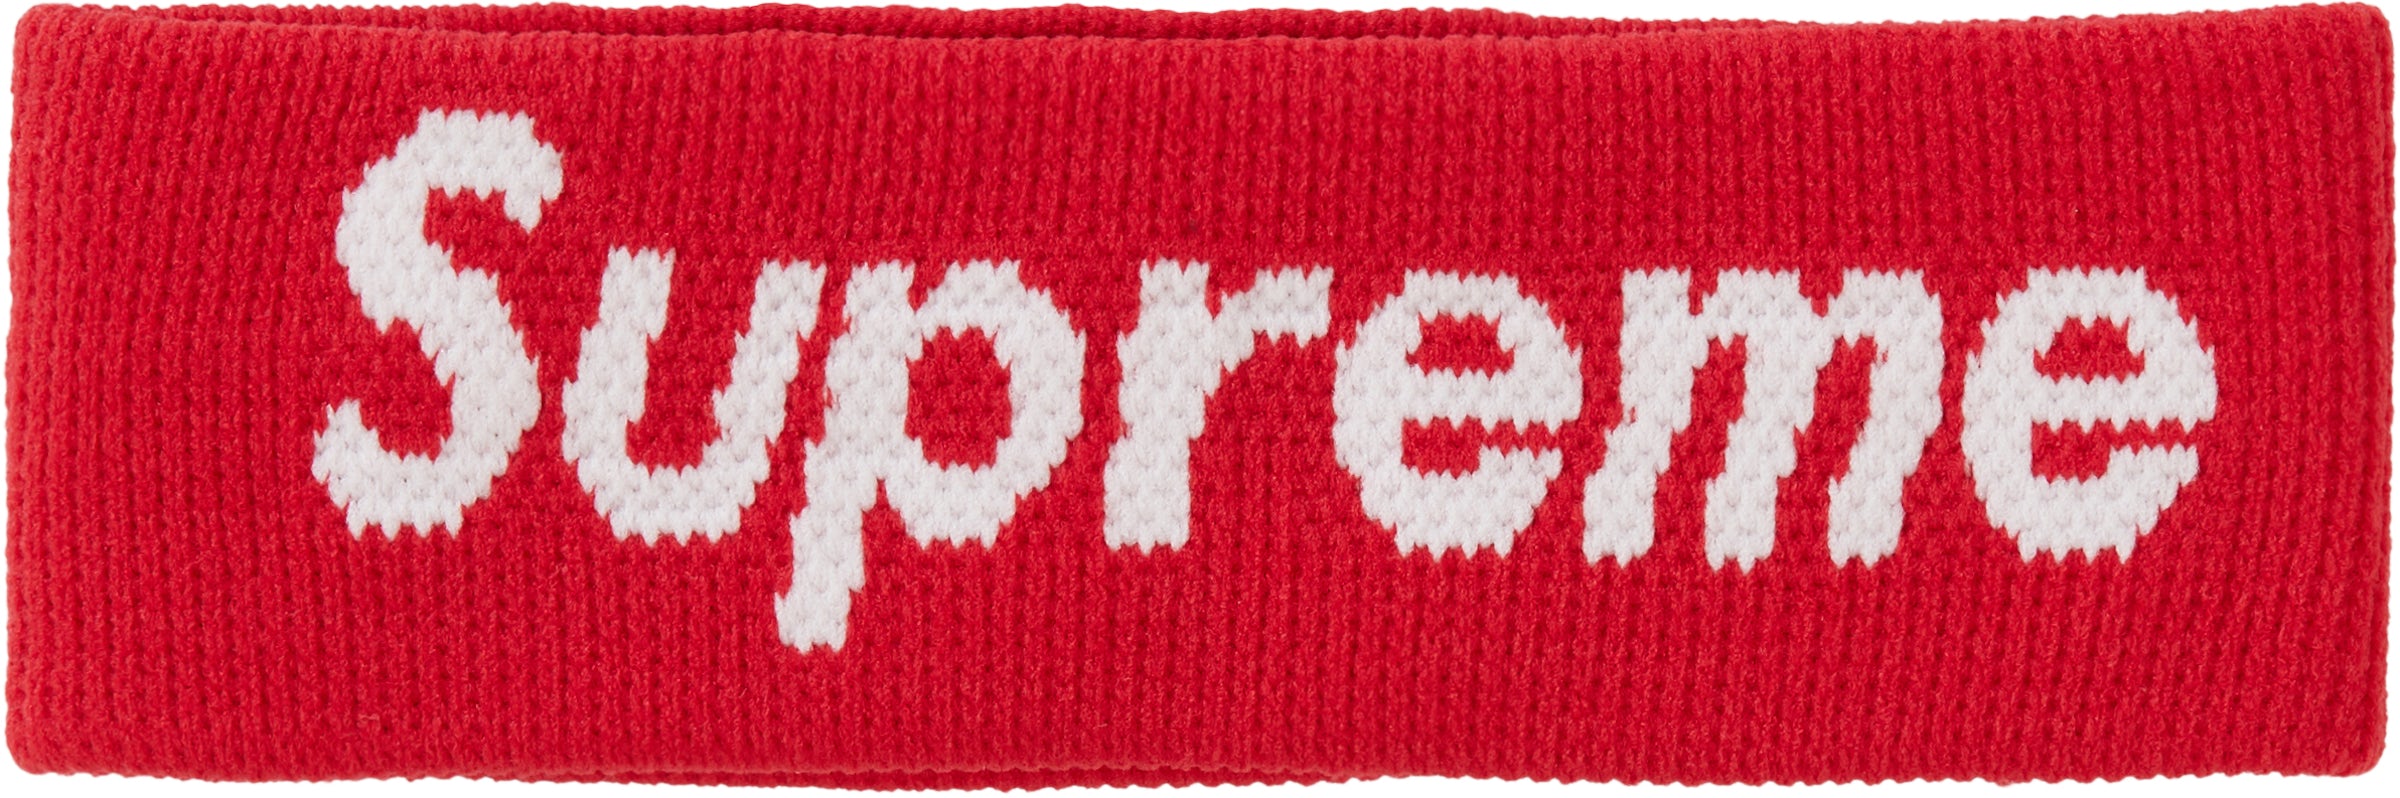 Red LV Supreme Headband